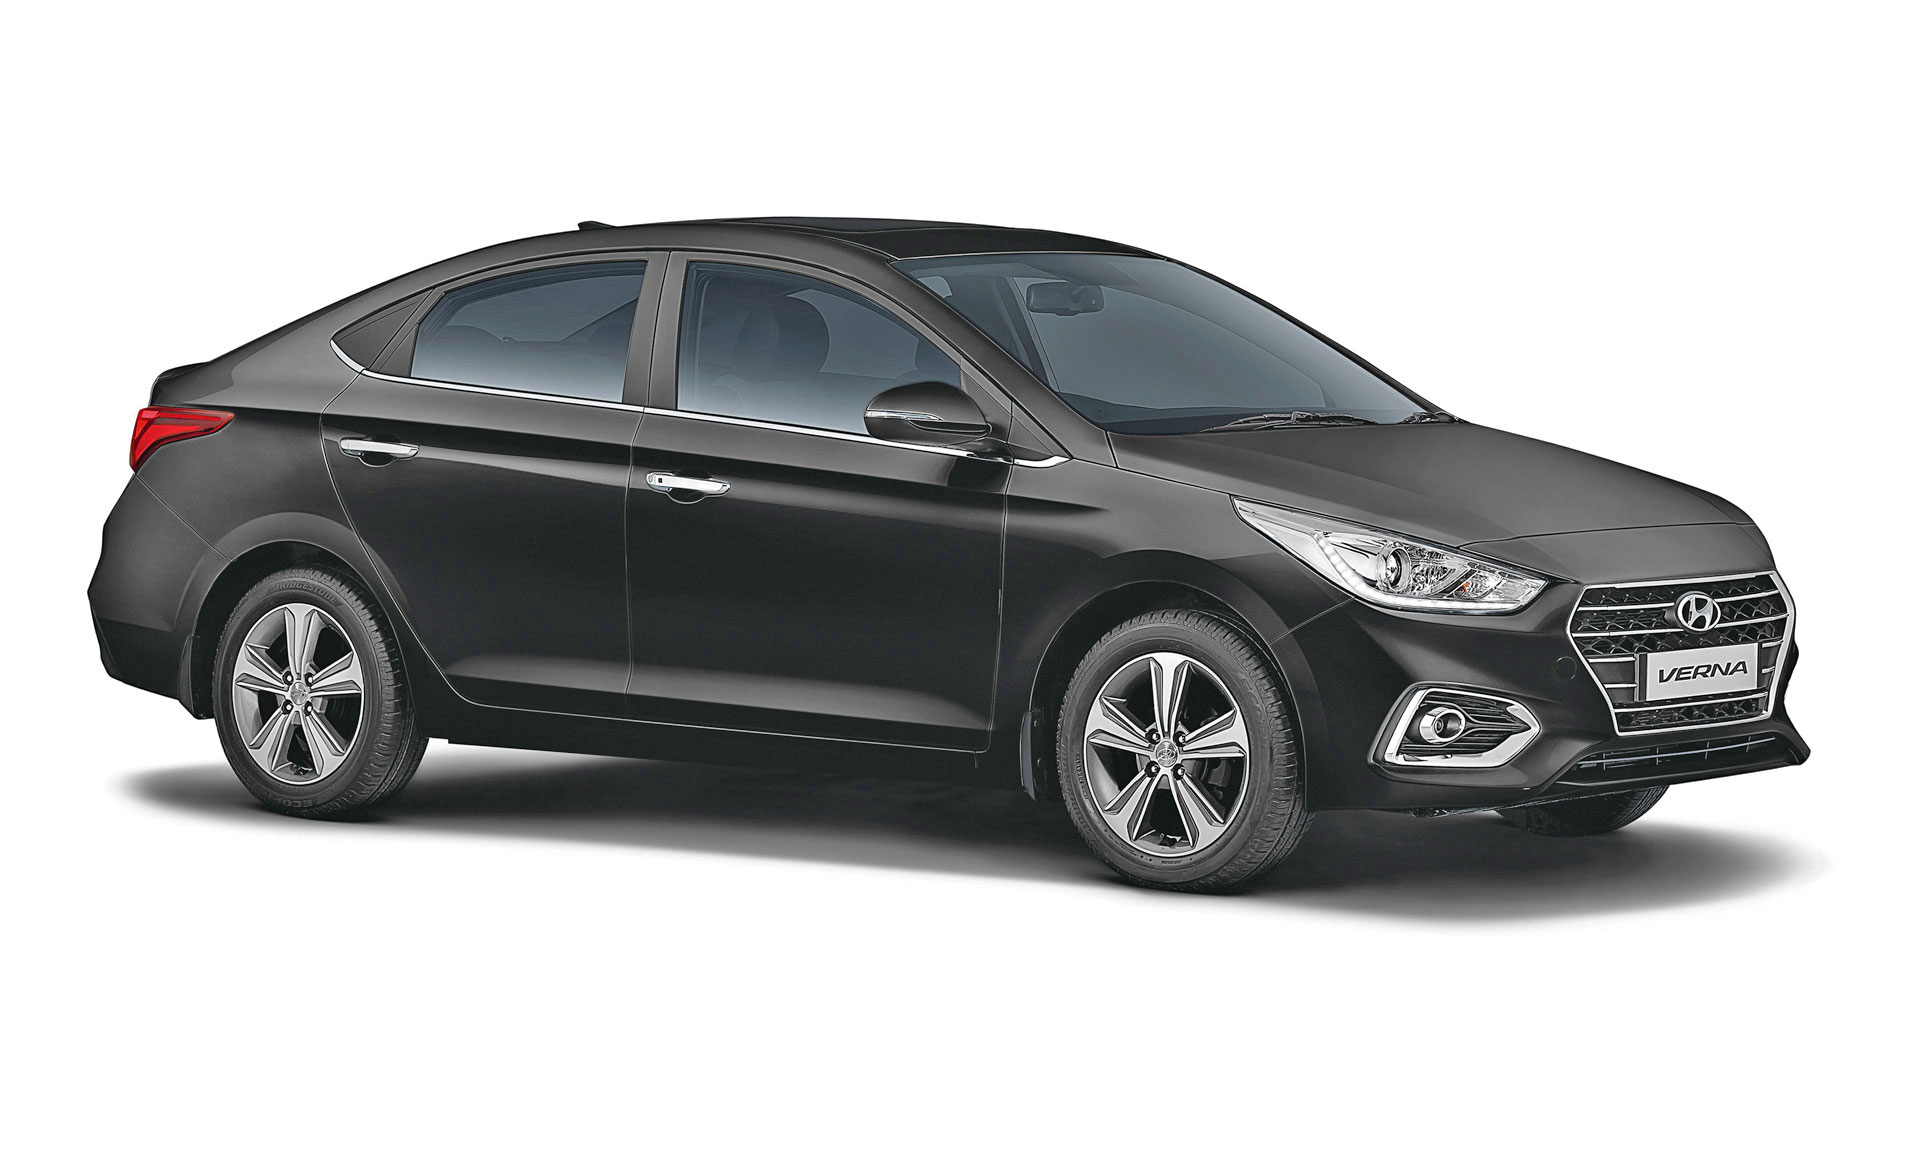 Hyundai Verna Car Photos And Price